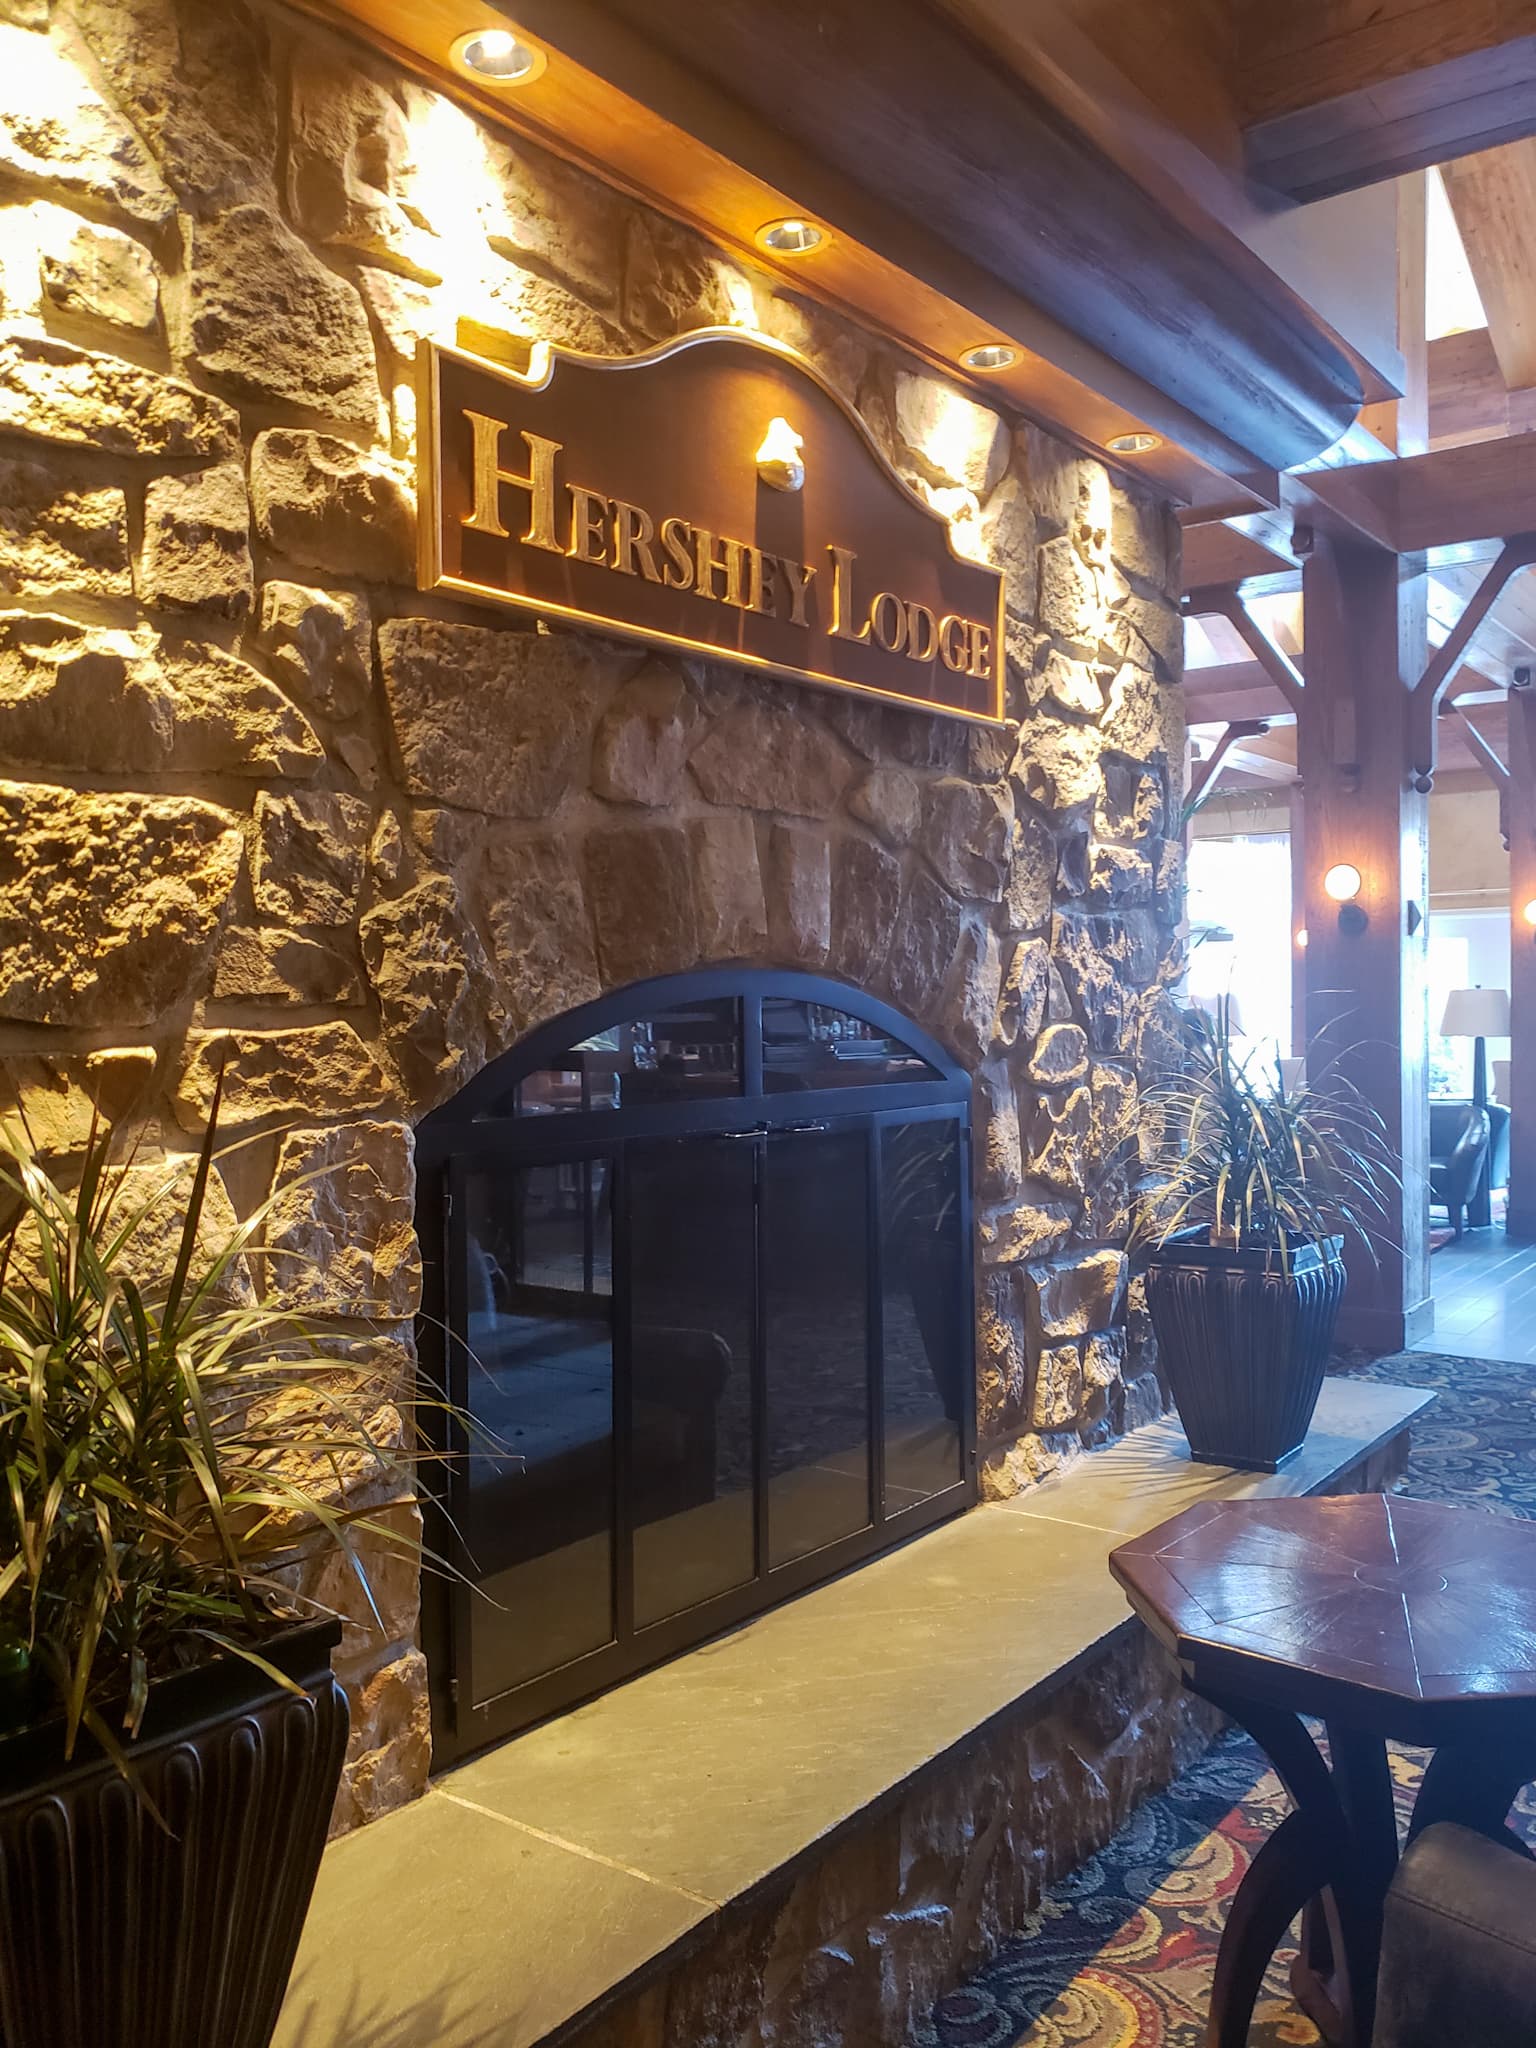 The Hershey Lodge